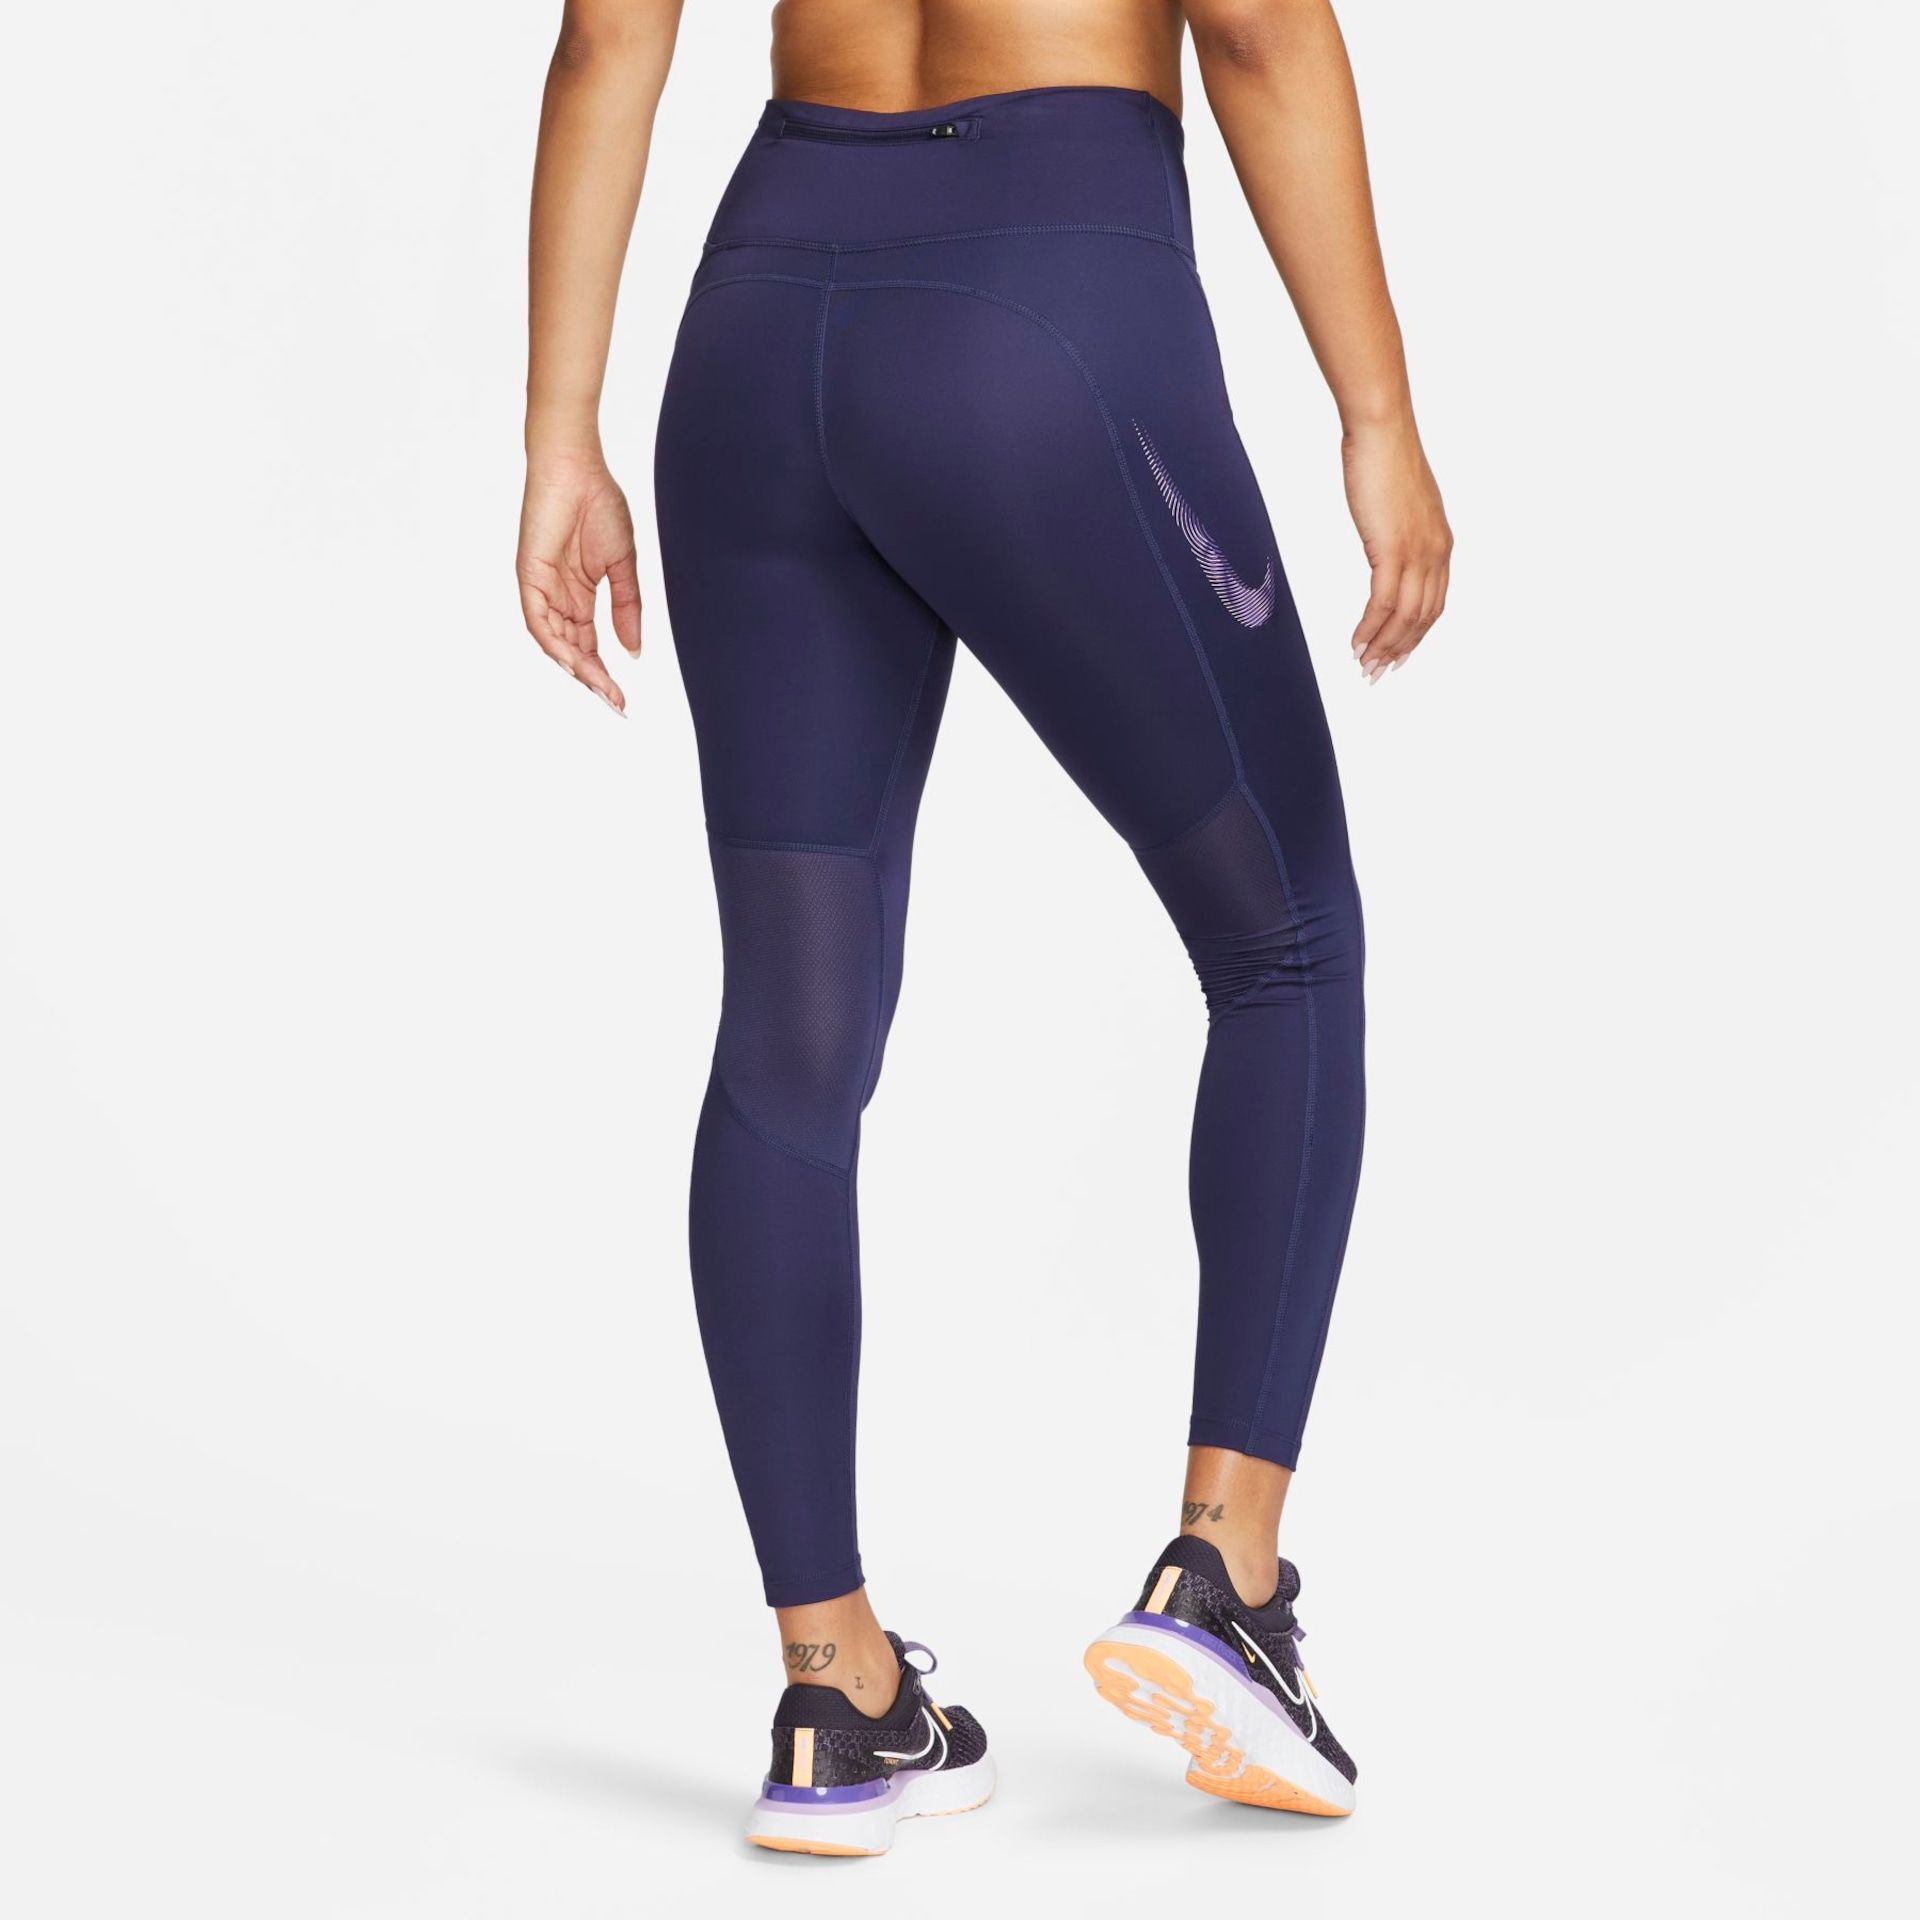 Legging Nike Fast Feminina - Foto 2